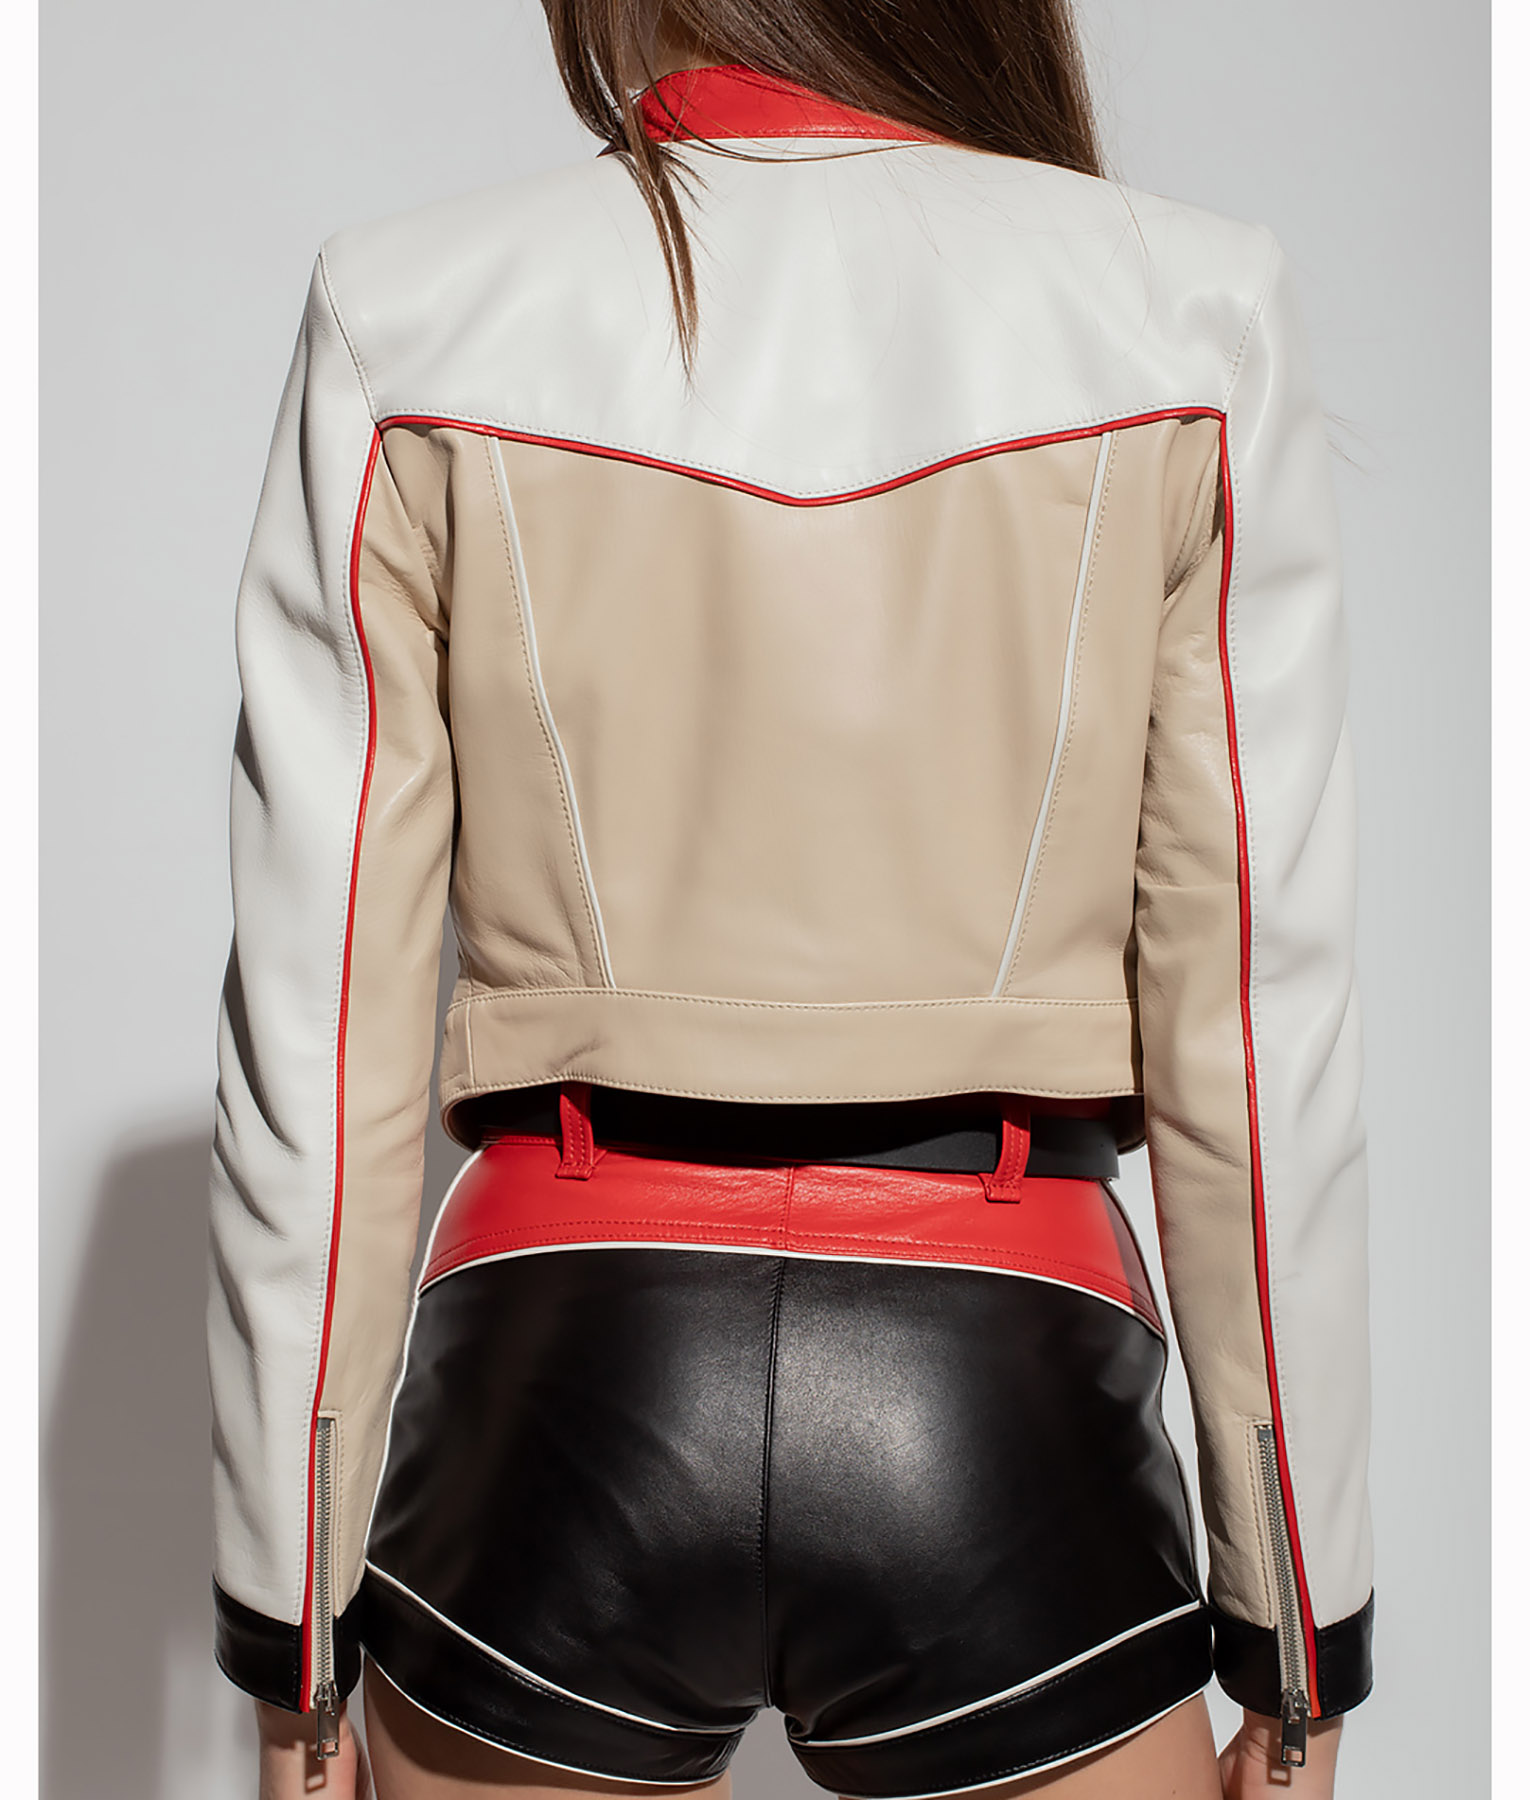 Nathalie Emmanuel White Leather Jacket